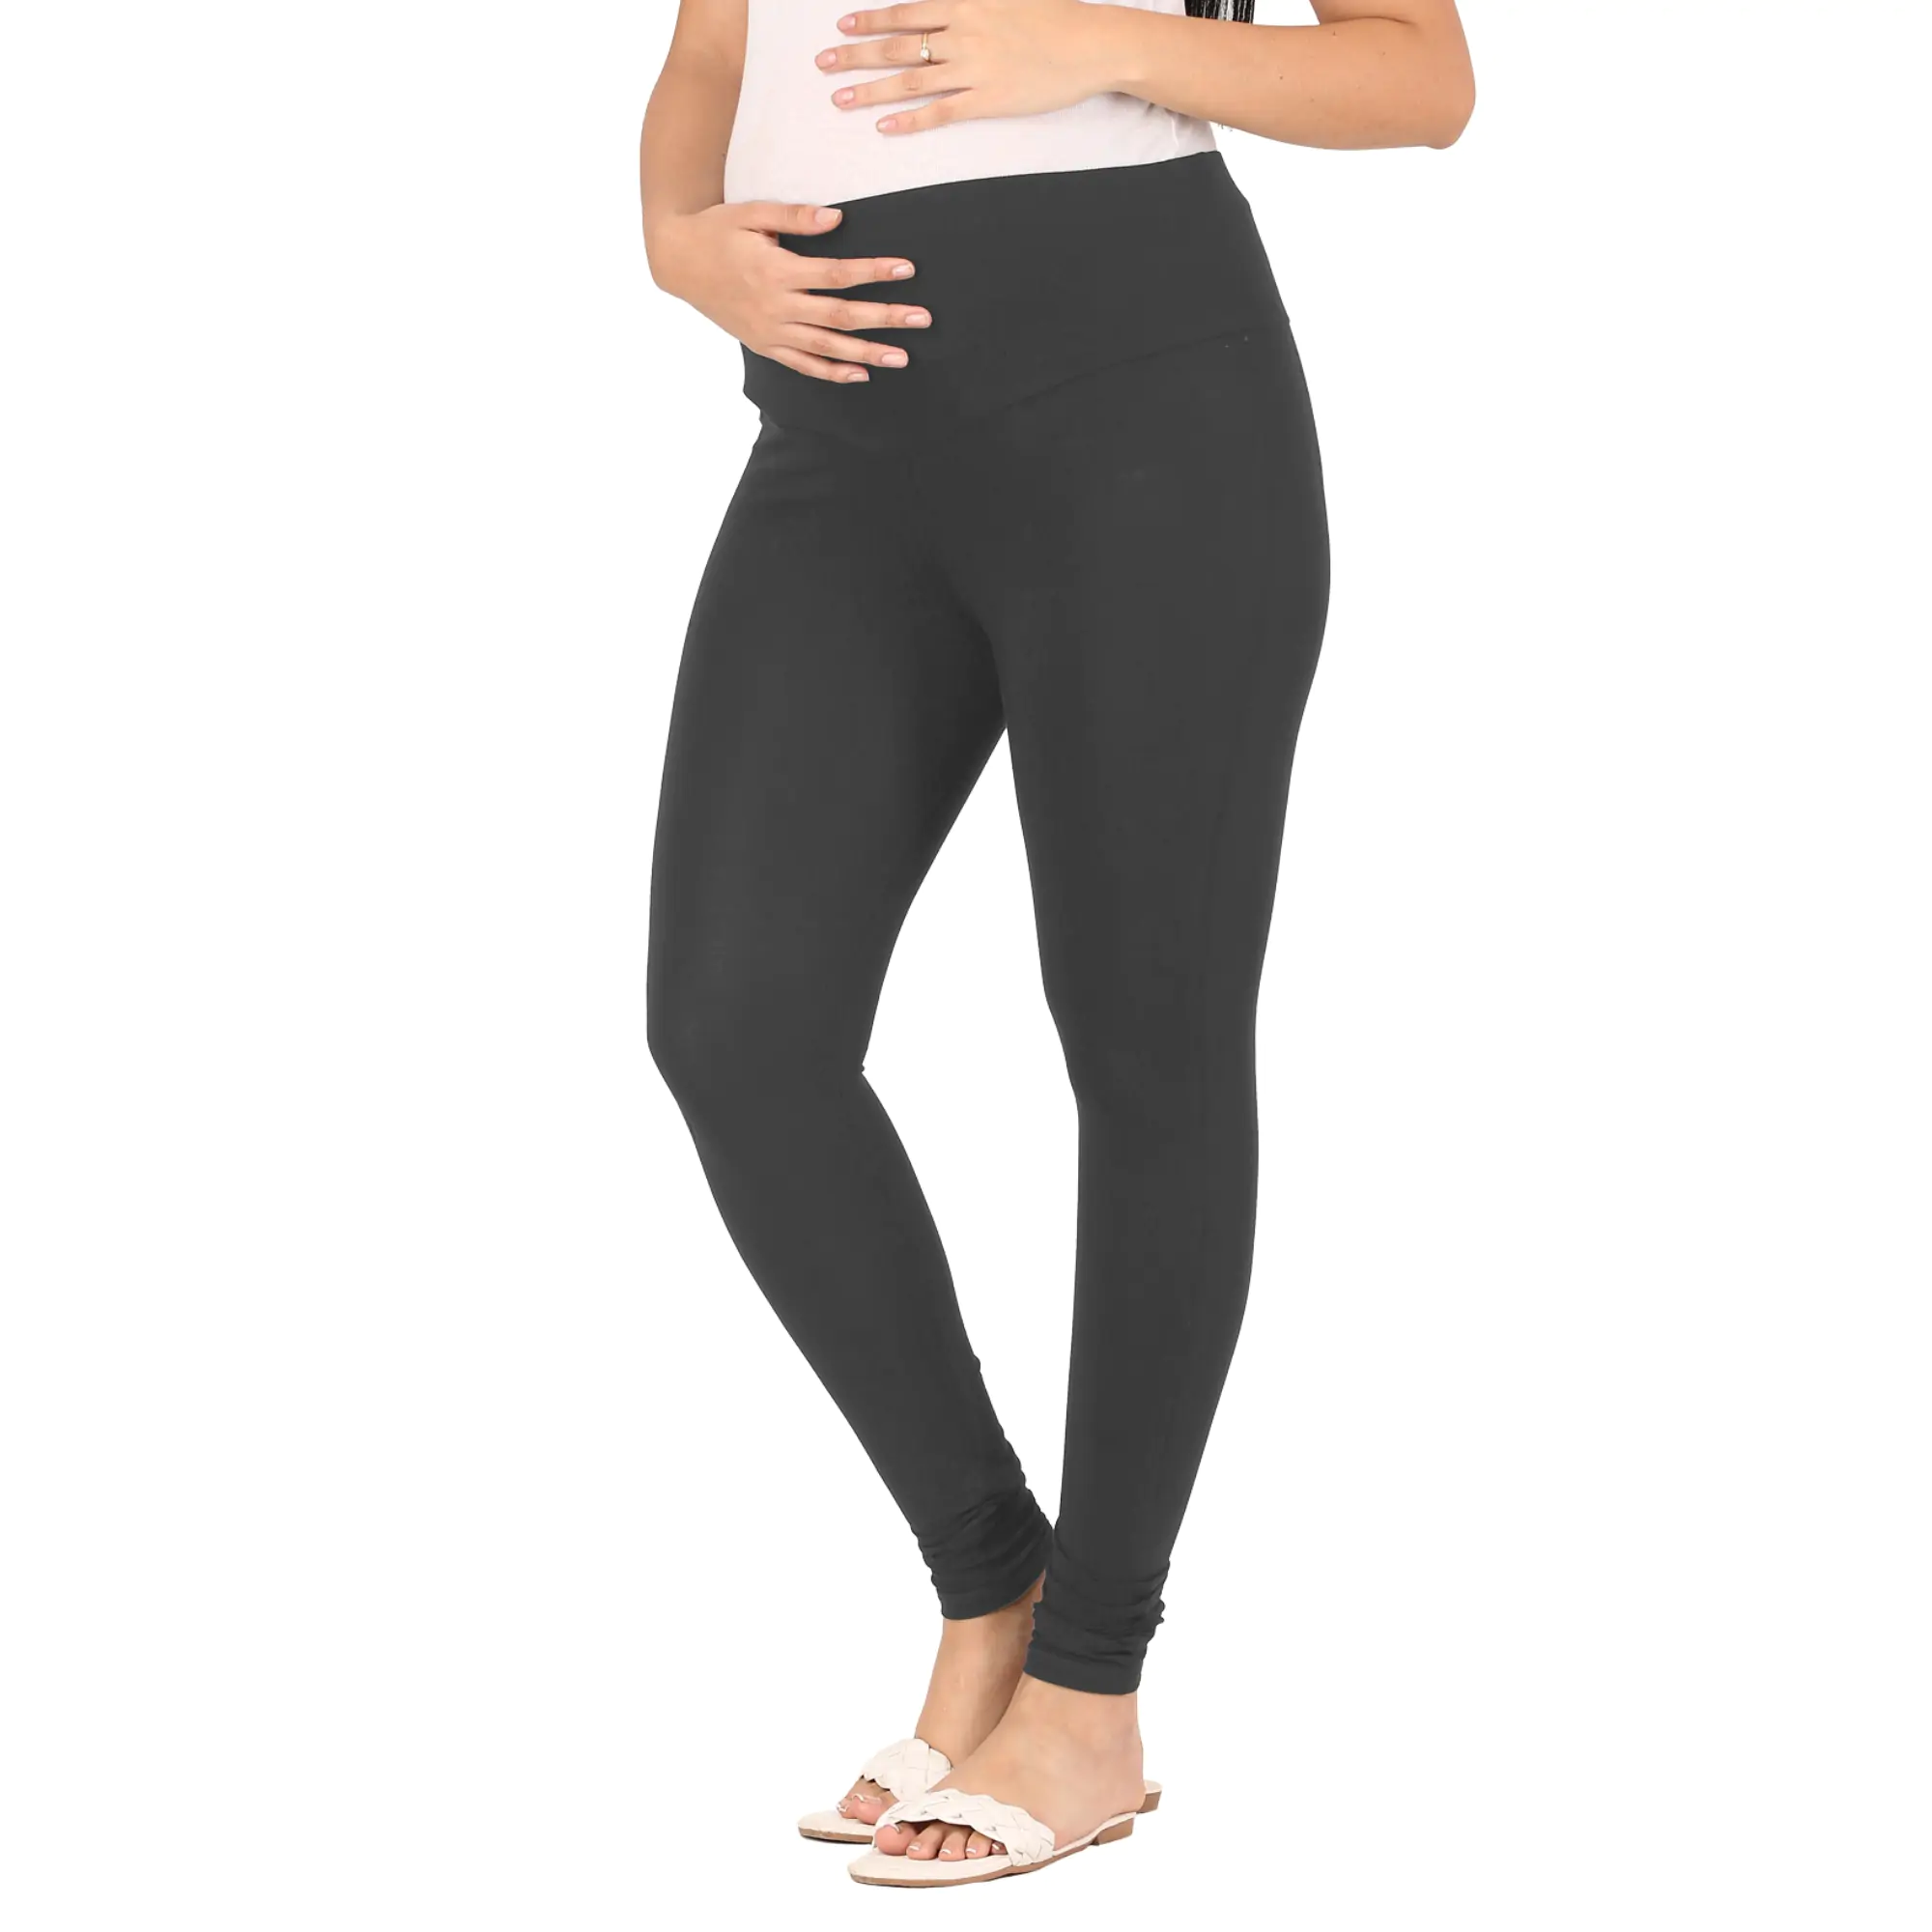 Mylo Stretchable Pregnancy & Post Delivery Leggings - Dark Grey (XL)